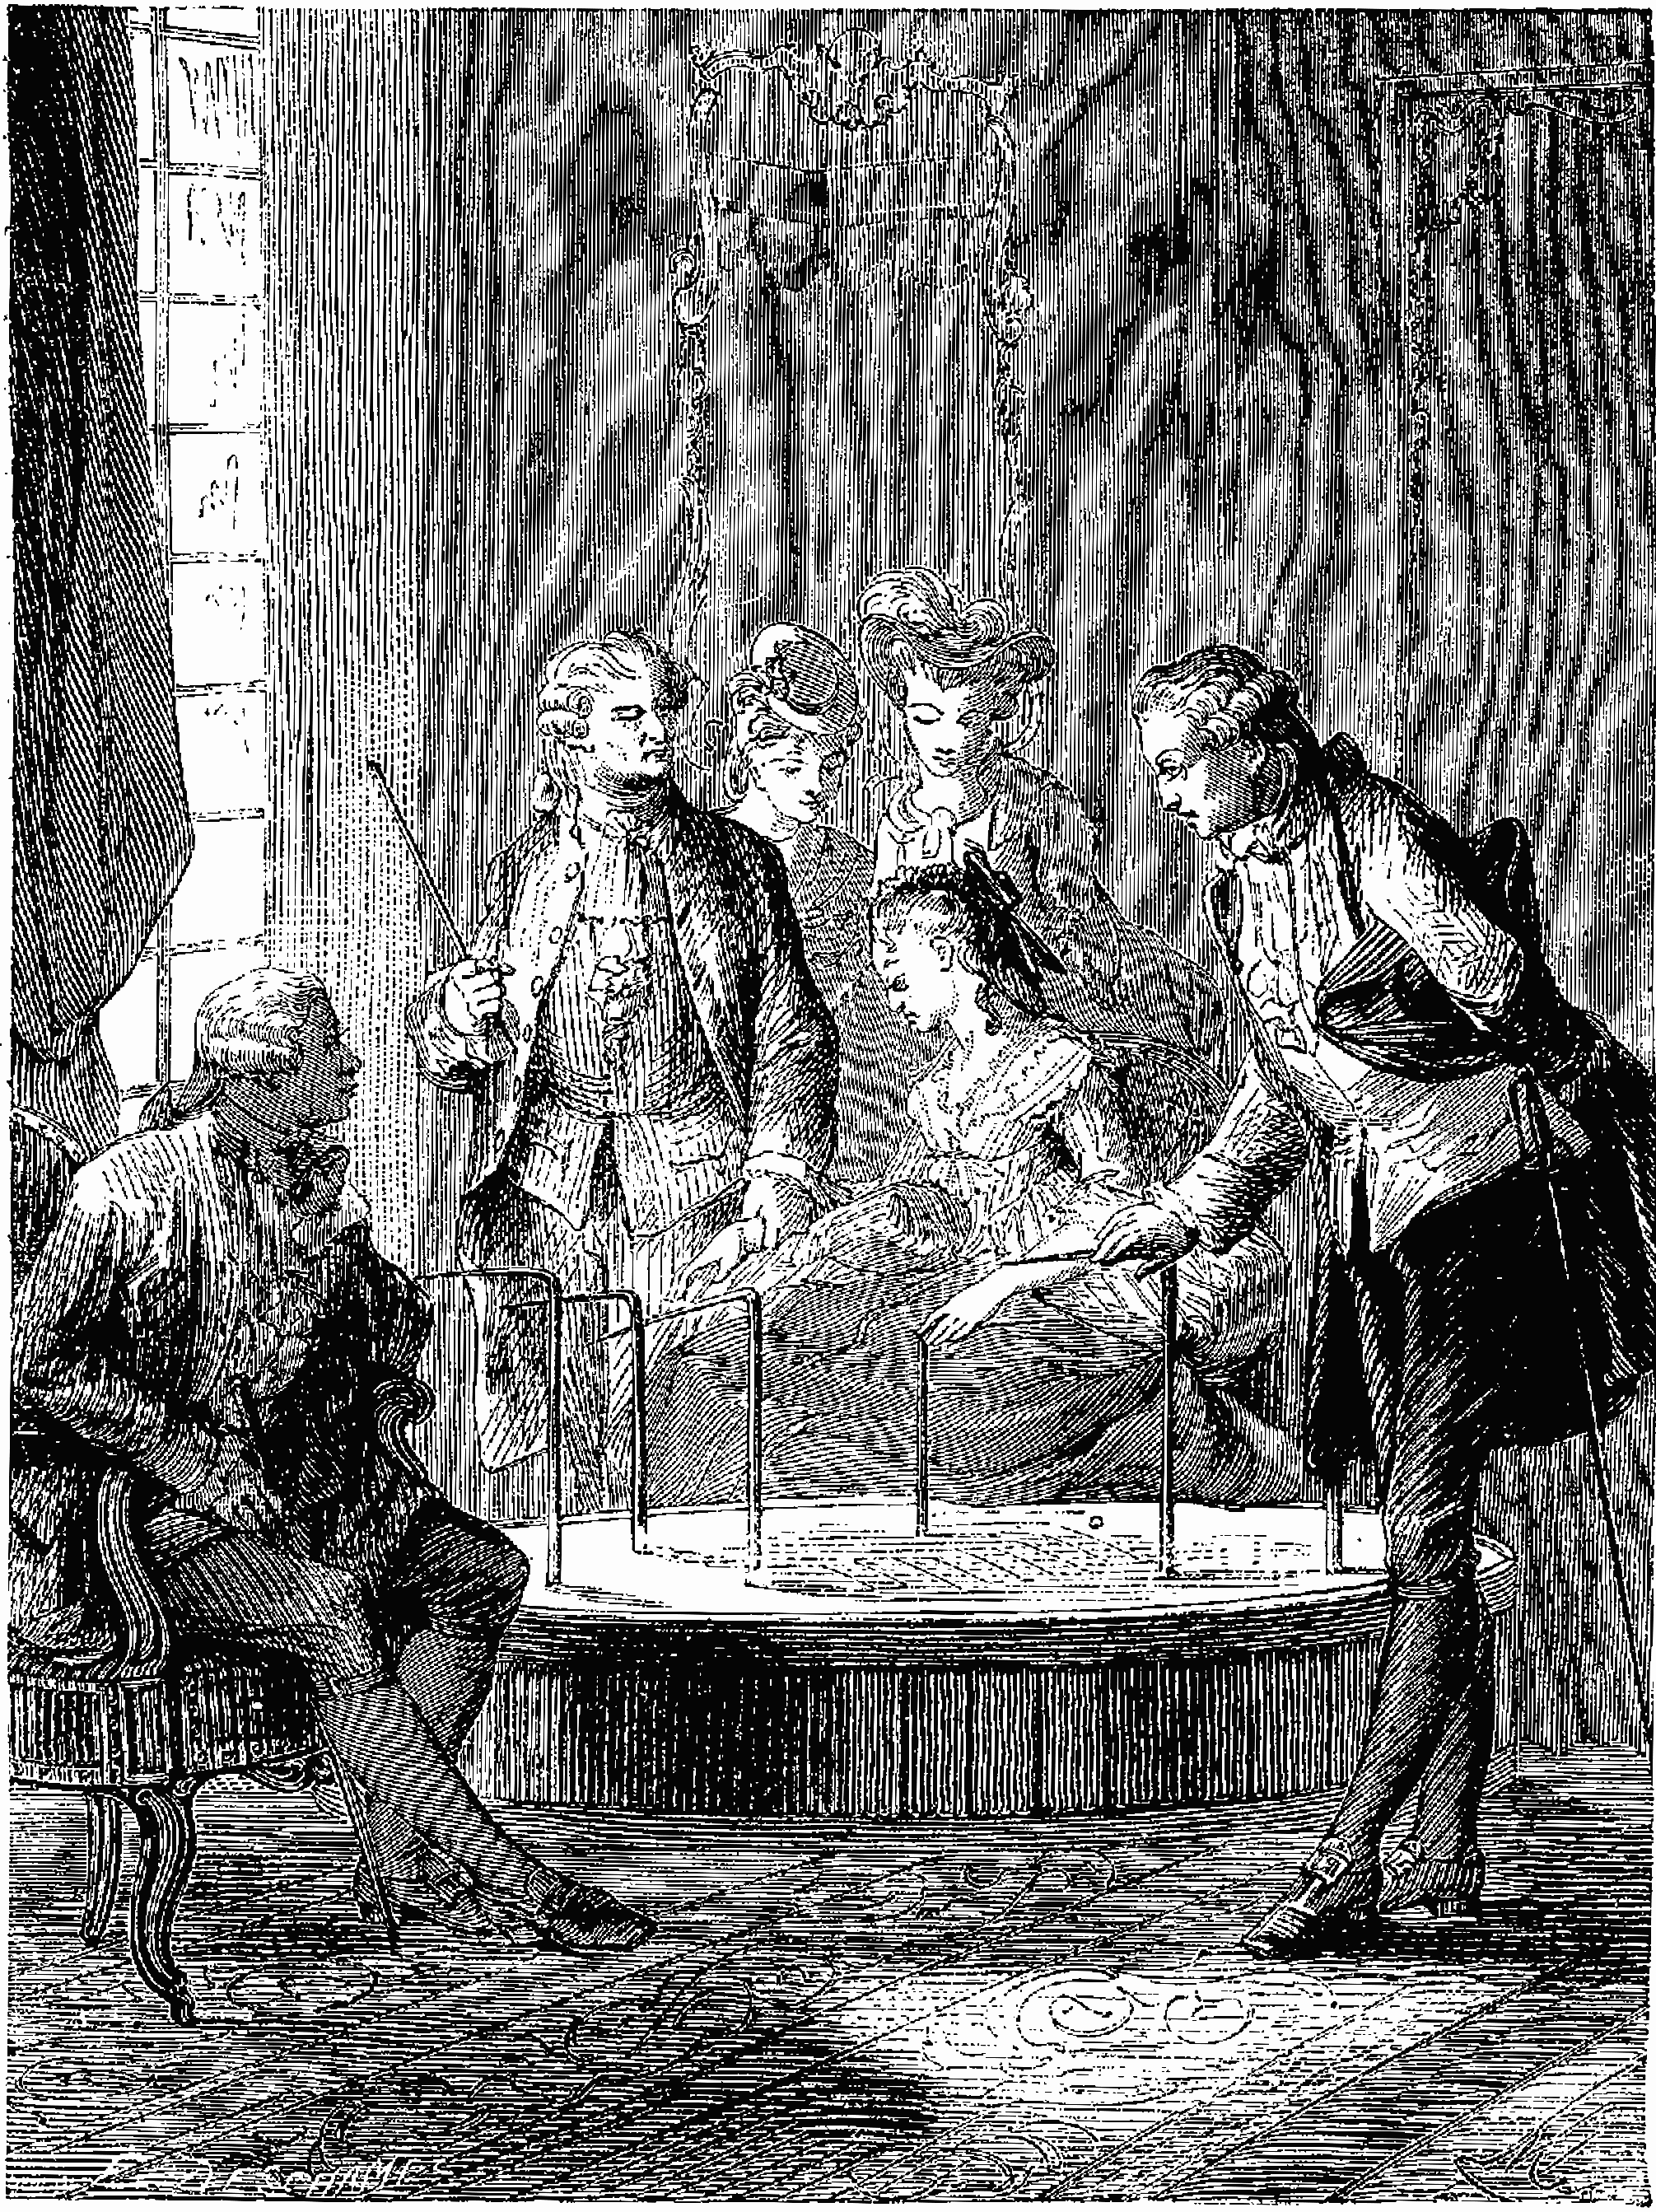 File:Rouleau d'impression (Figuier 1878) p. 332 fig. 133 et 134.jpg -  Wikimedia Commons